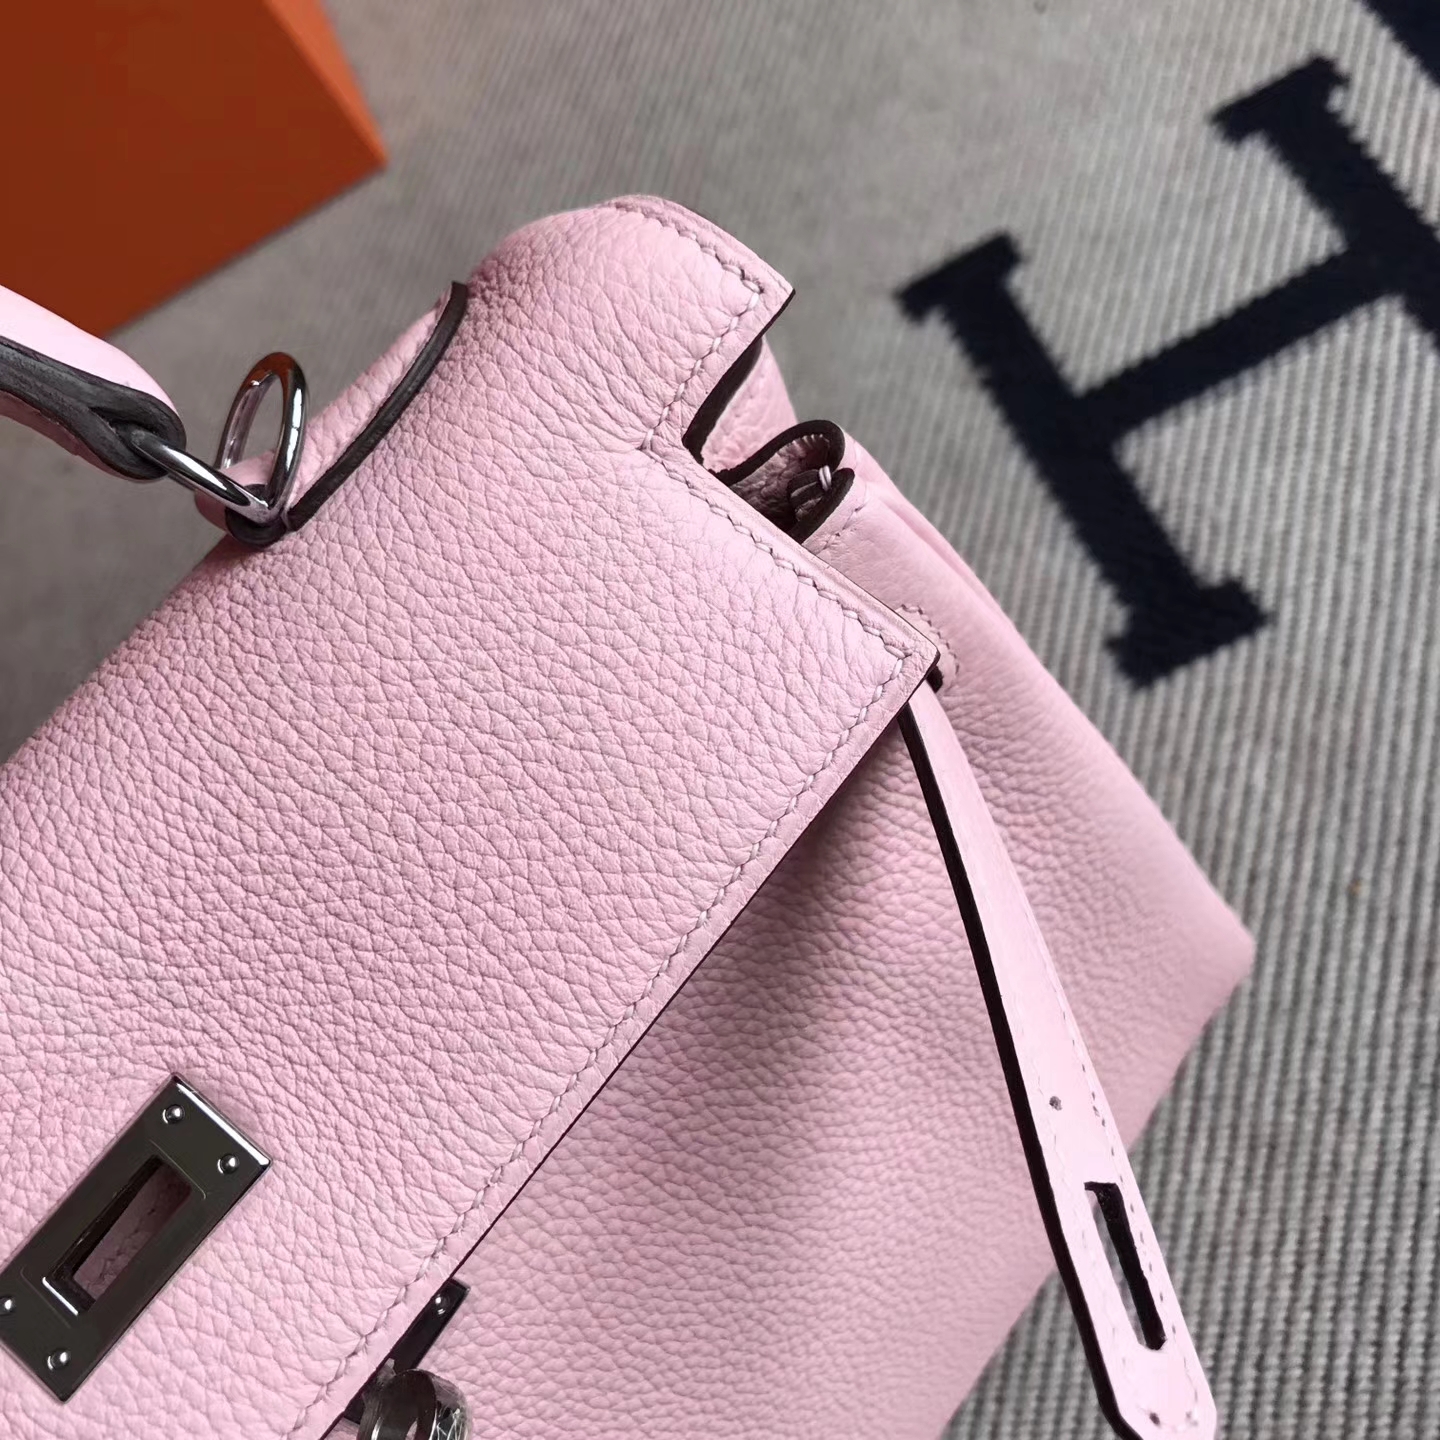 Pretty Hermes 3Q New Pink Togo Leather Kelly Handbag25cm Silver Hardware